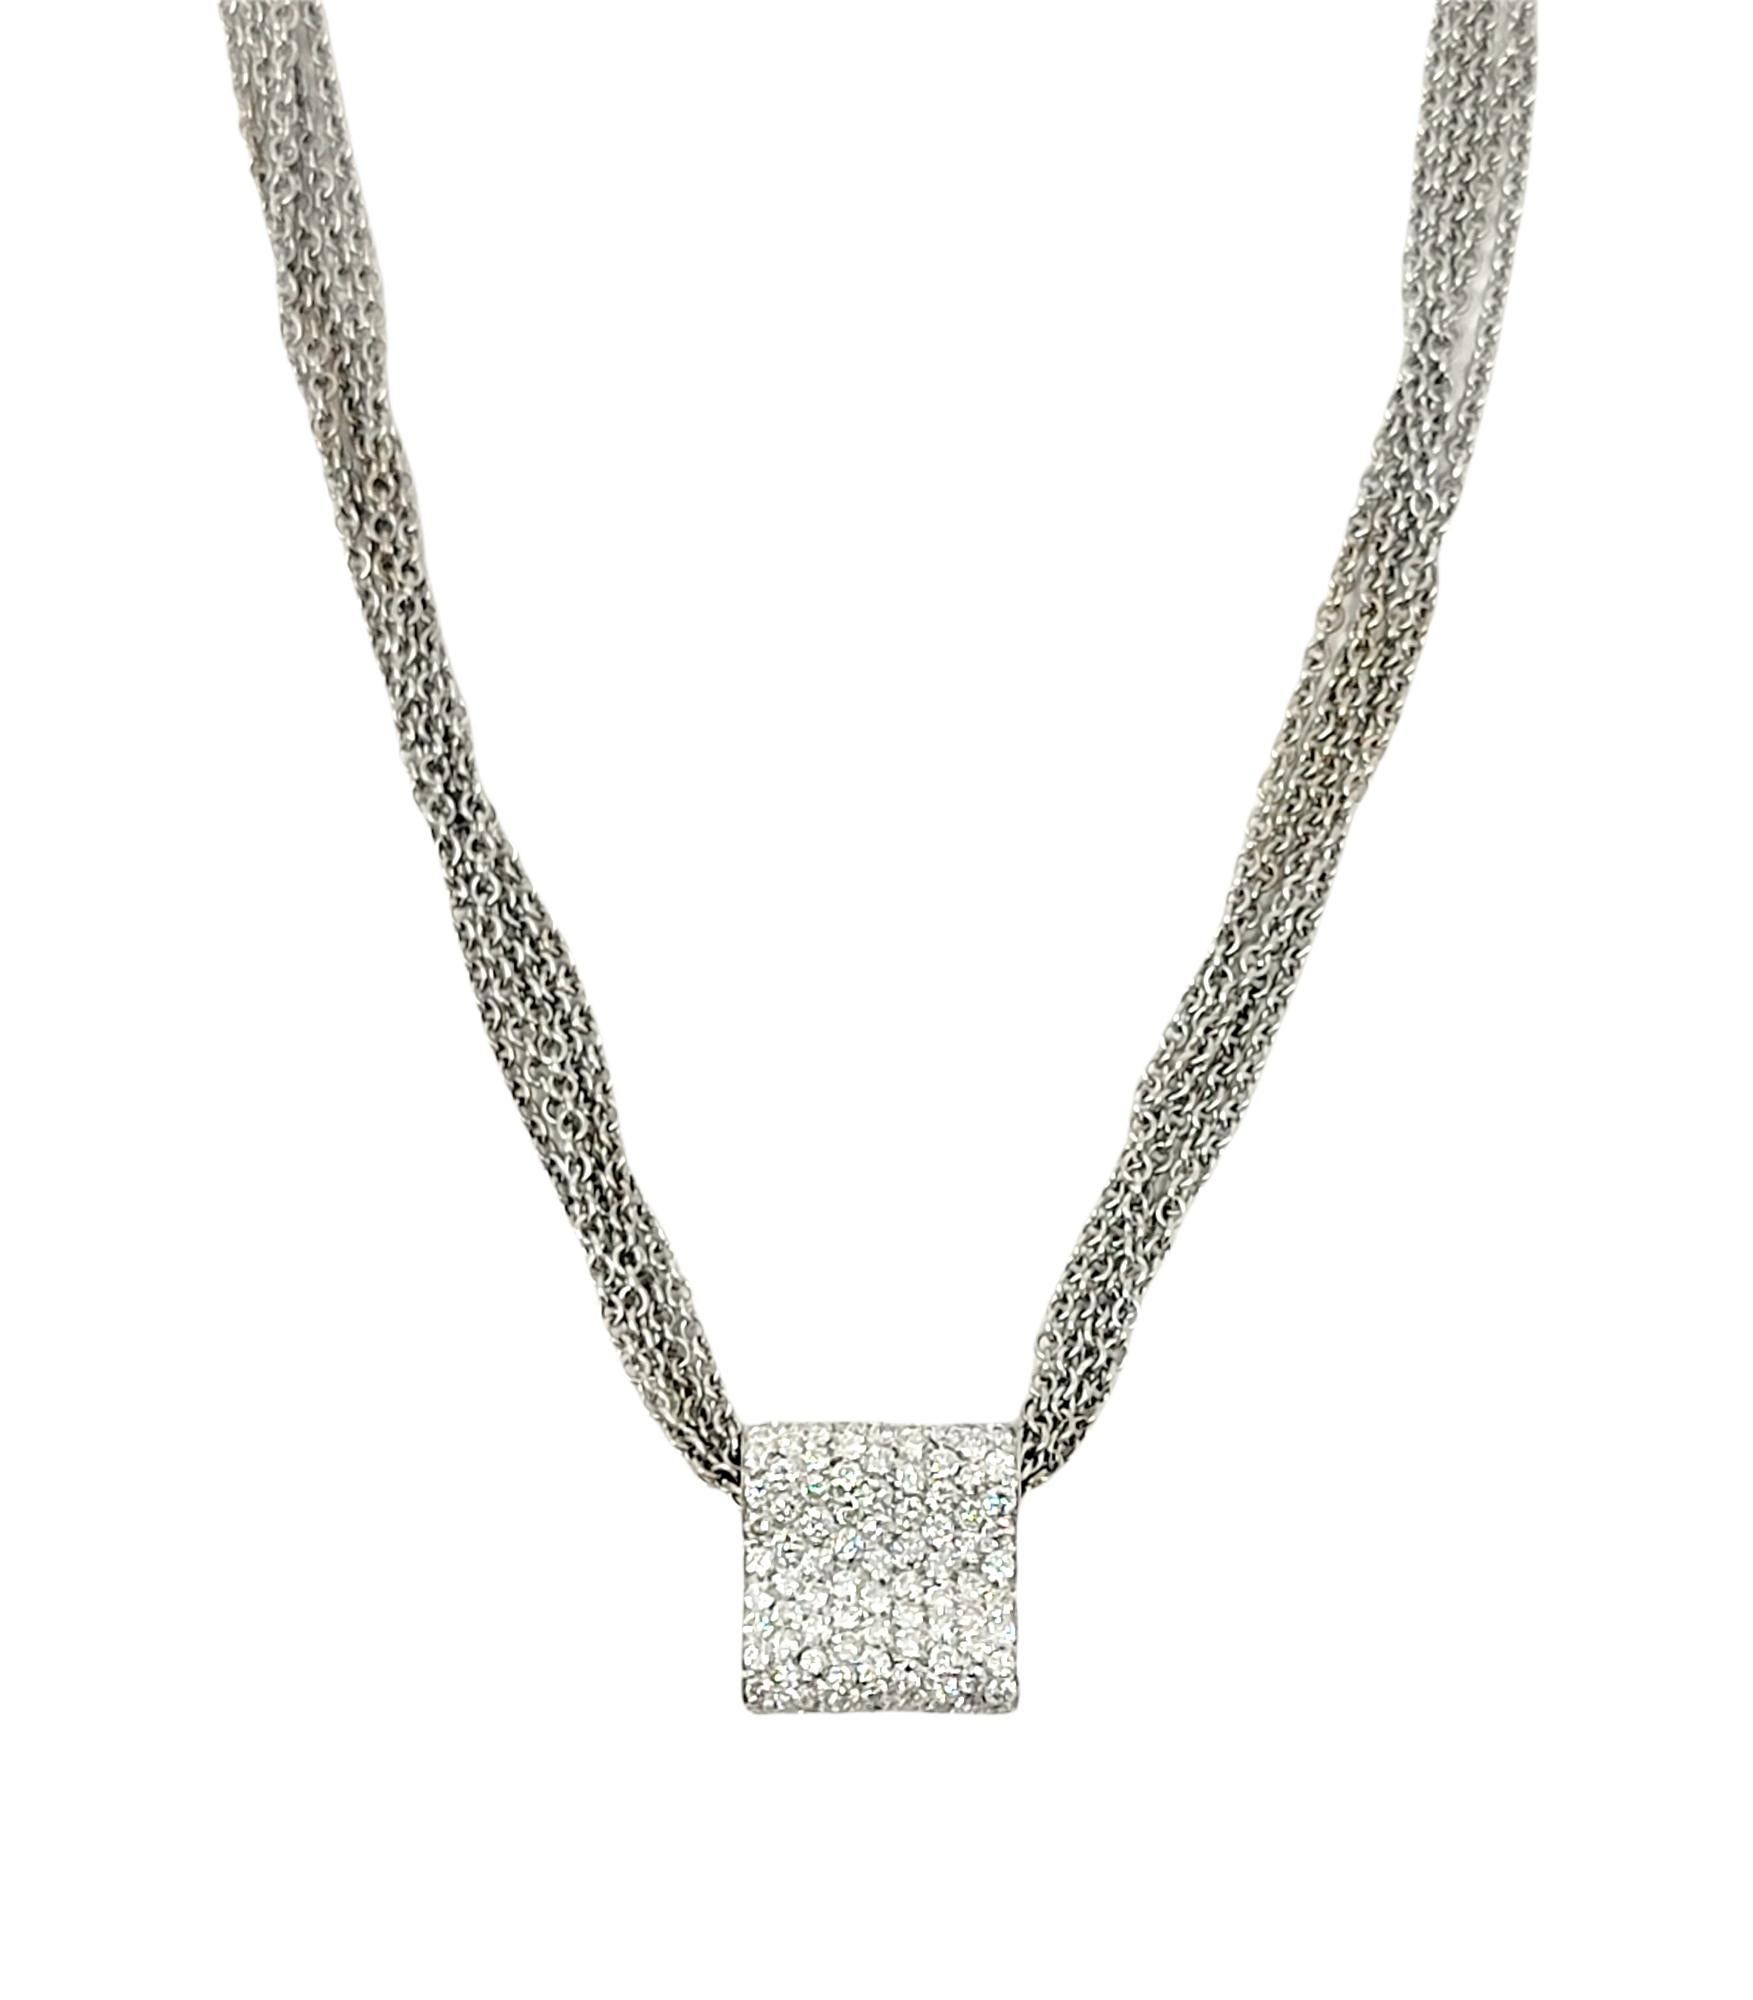 Round Cut Luca Carati Pave Diamond 5 Strand Chain Pendant Necklace in 18 White Karat Gold For Sale